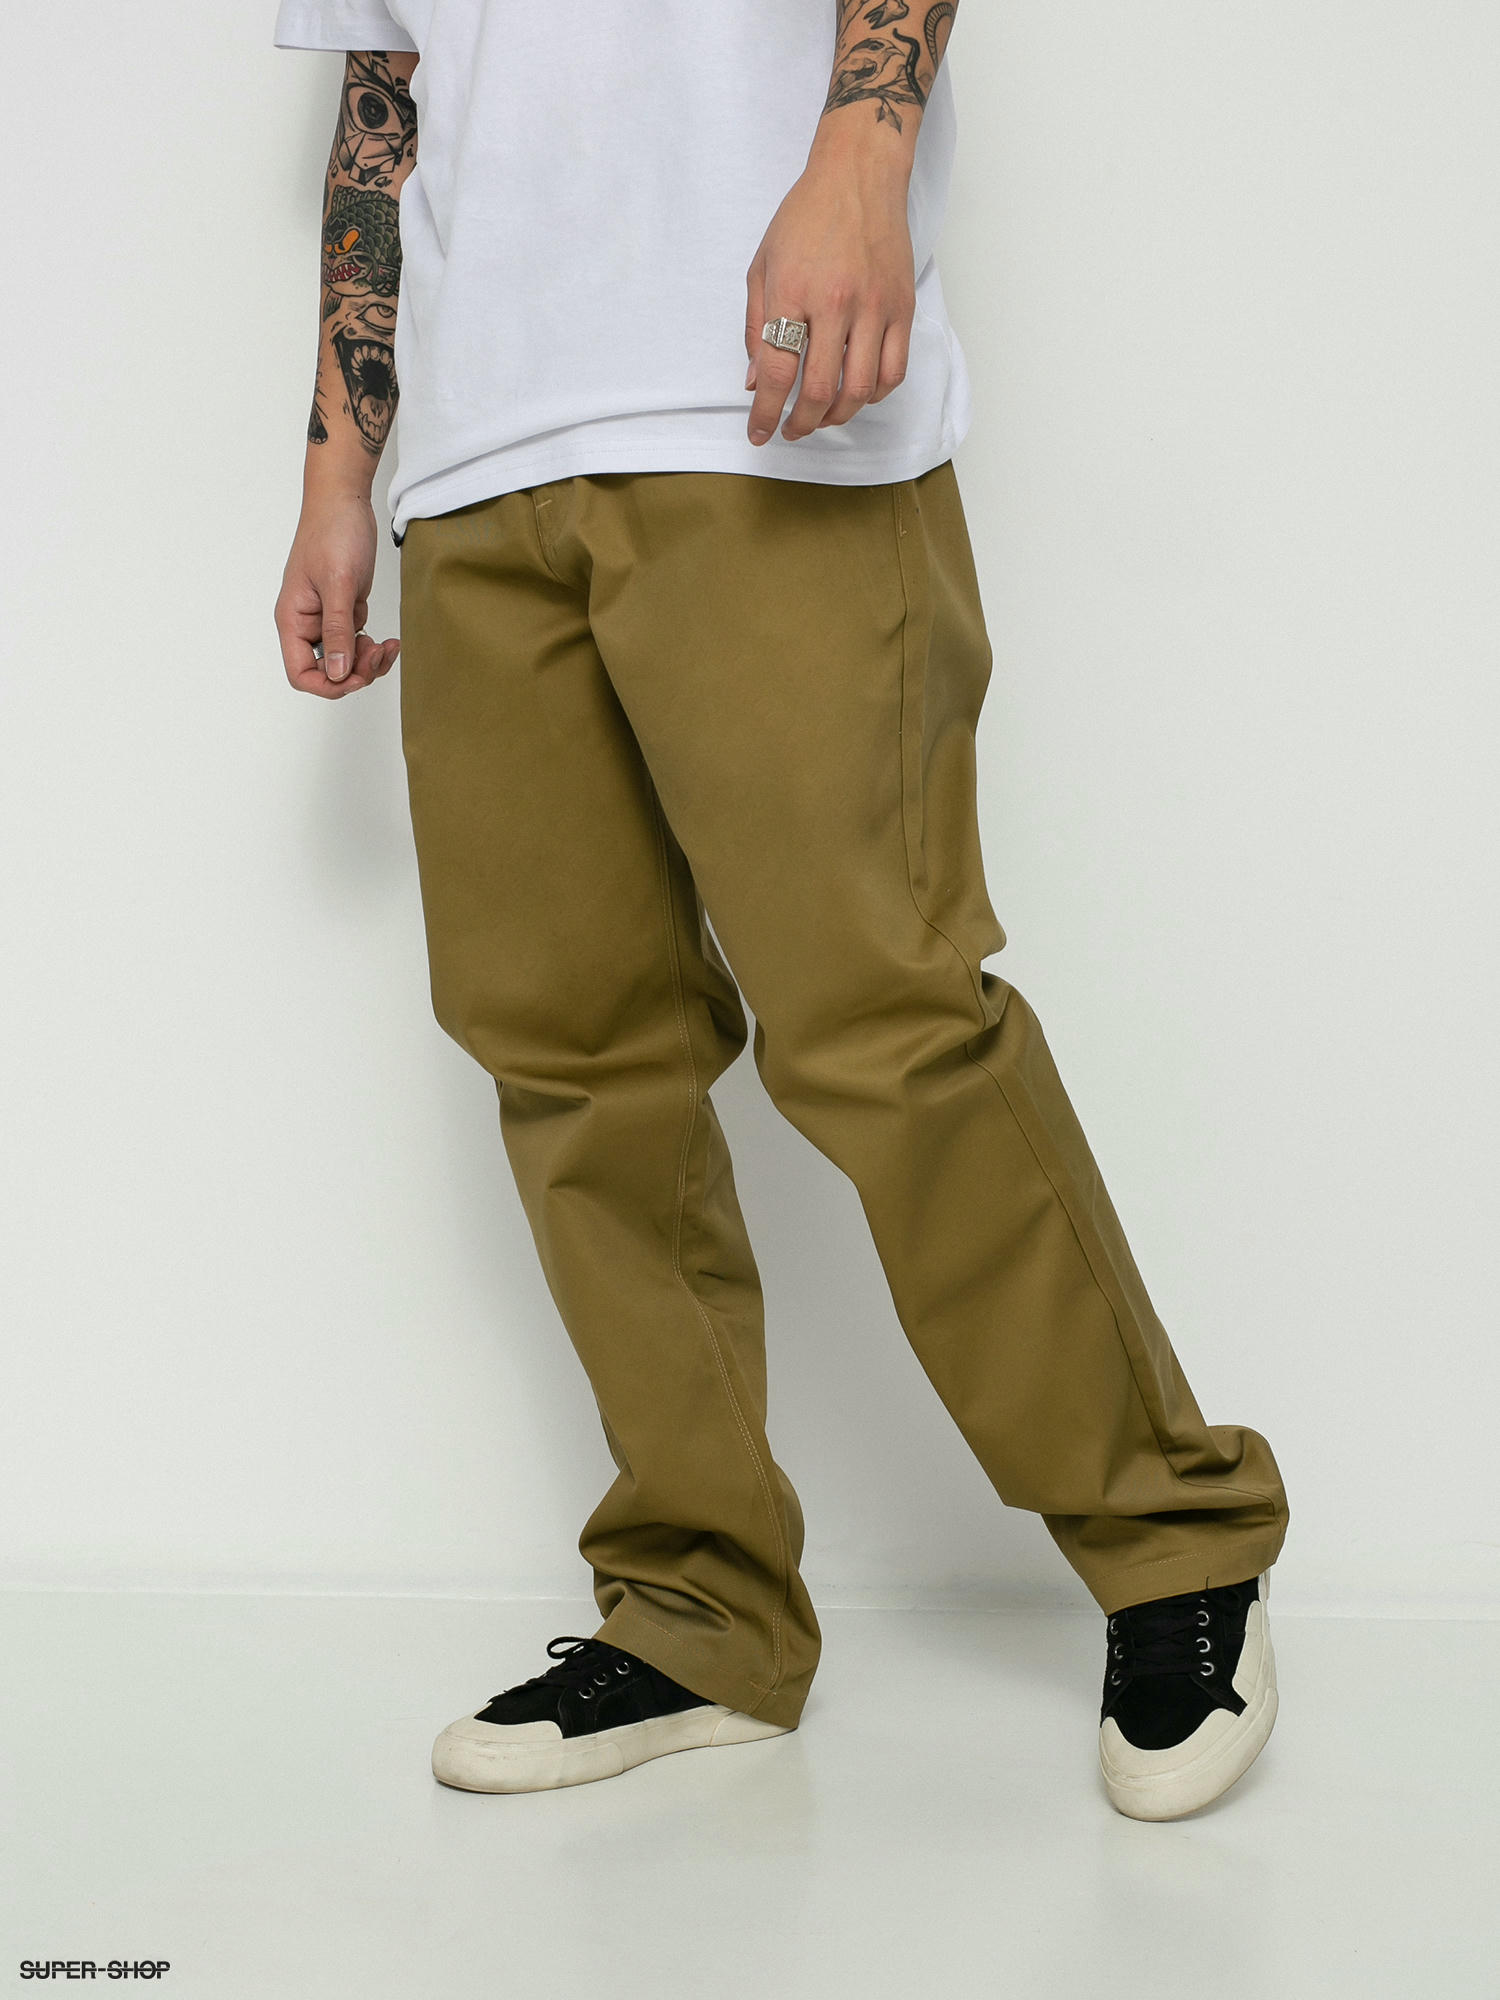 Brown PLAIN Dark Khaki Stretchable Trousers, Size: 30-38, Cotton